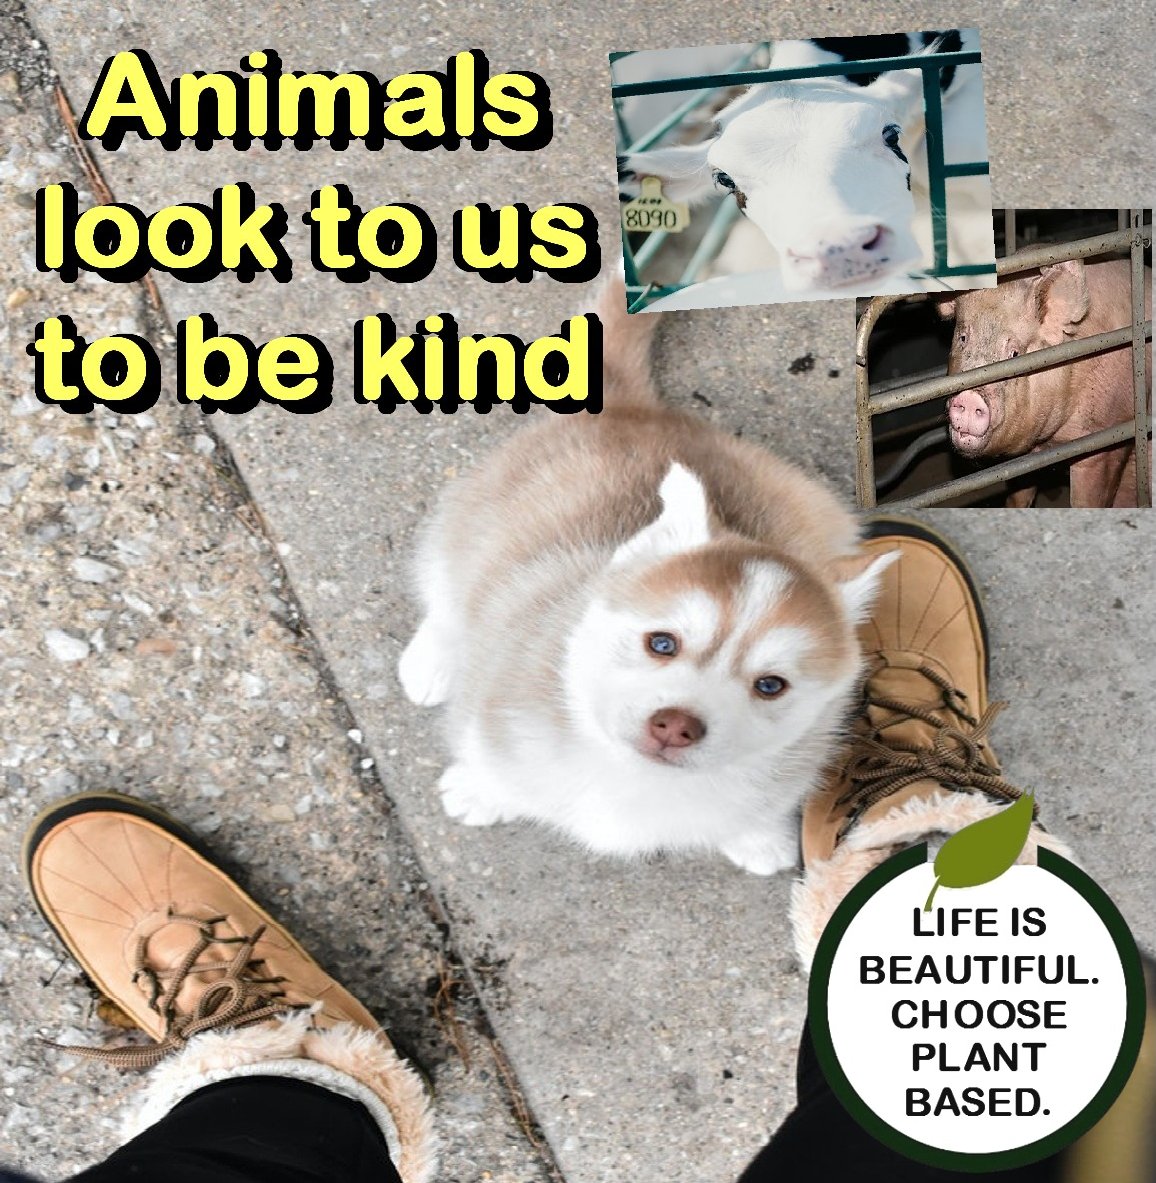 #bekindtoallkinds #kindness #compassion #empathy #peace #animals #bekind #govegan